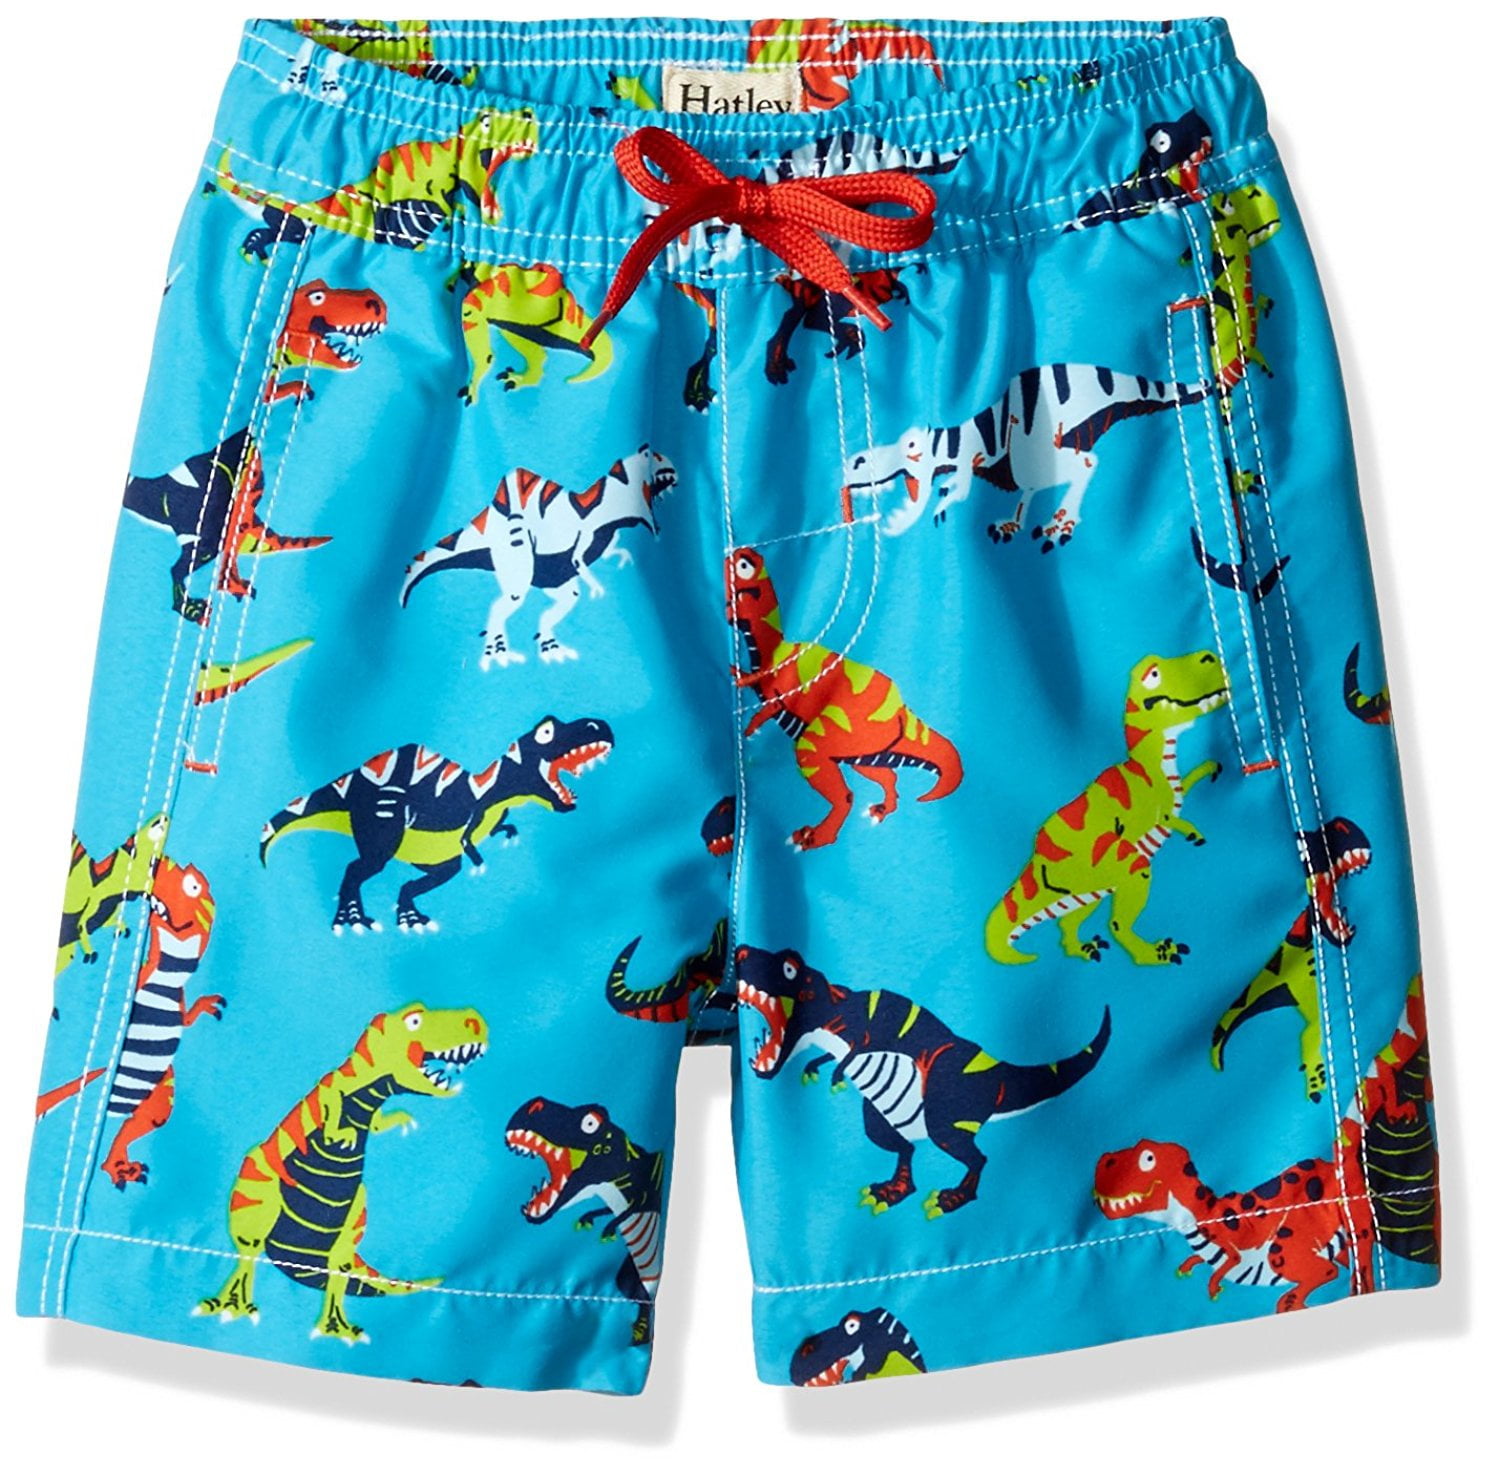 hatley boys' swim trunks - Walmart.com